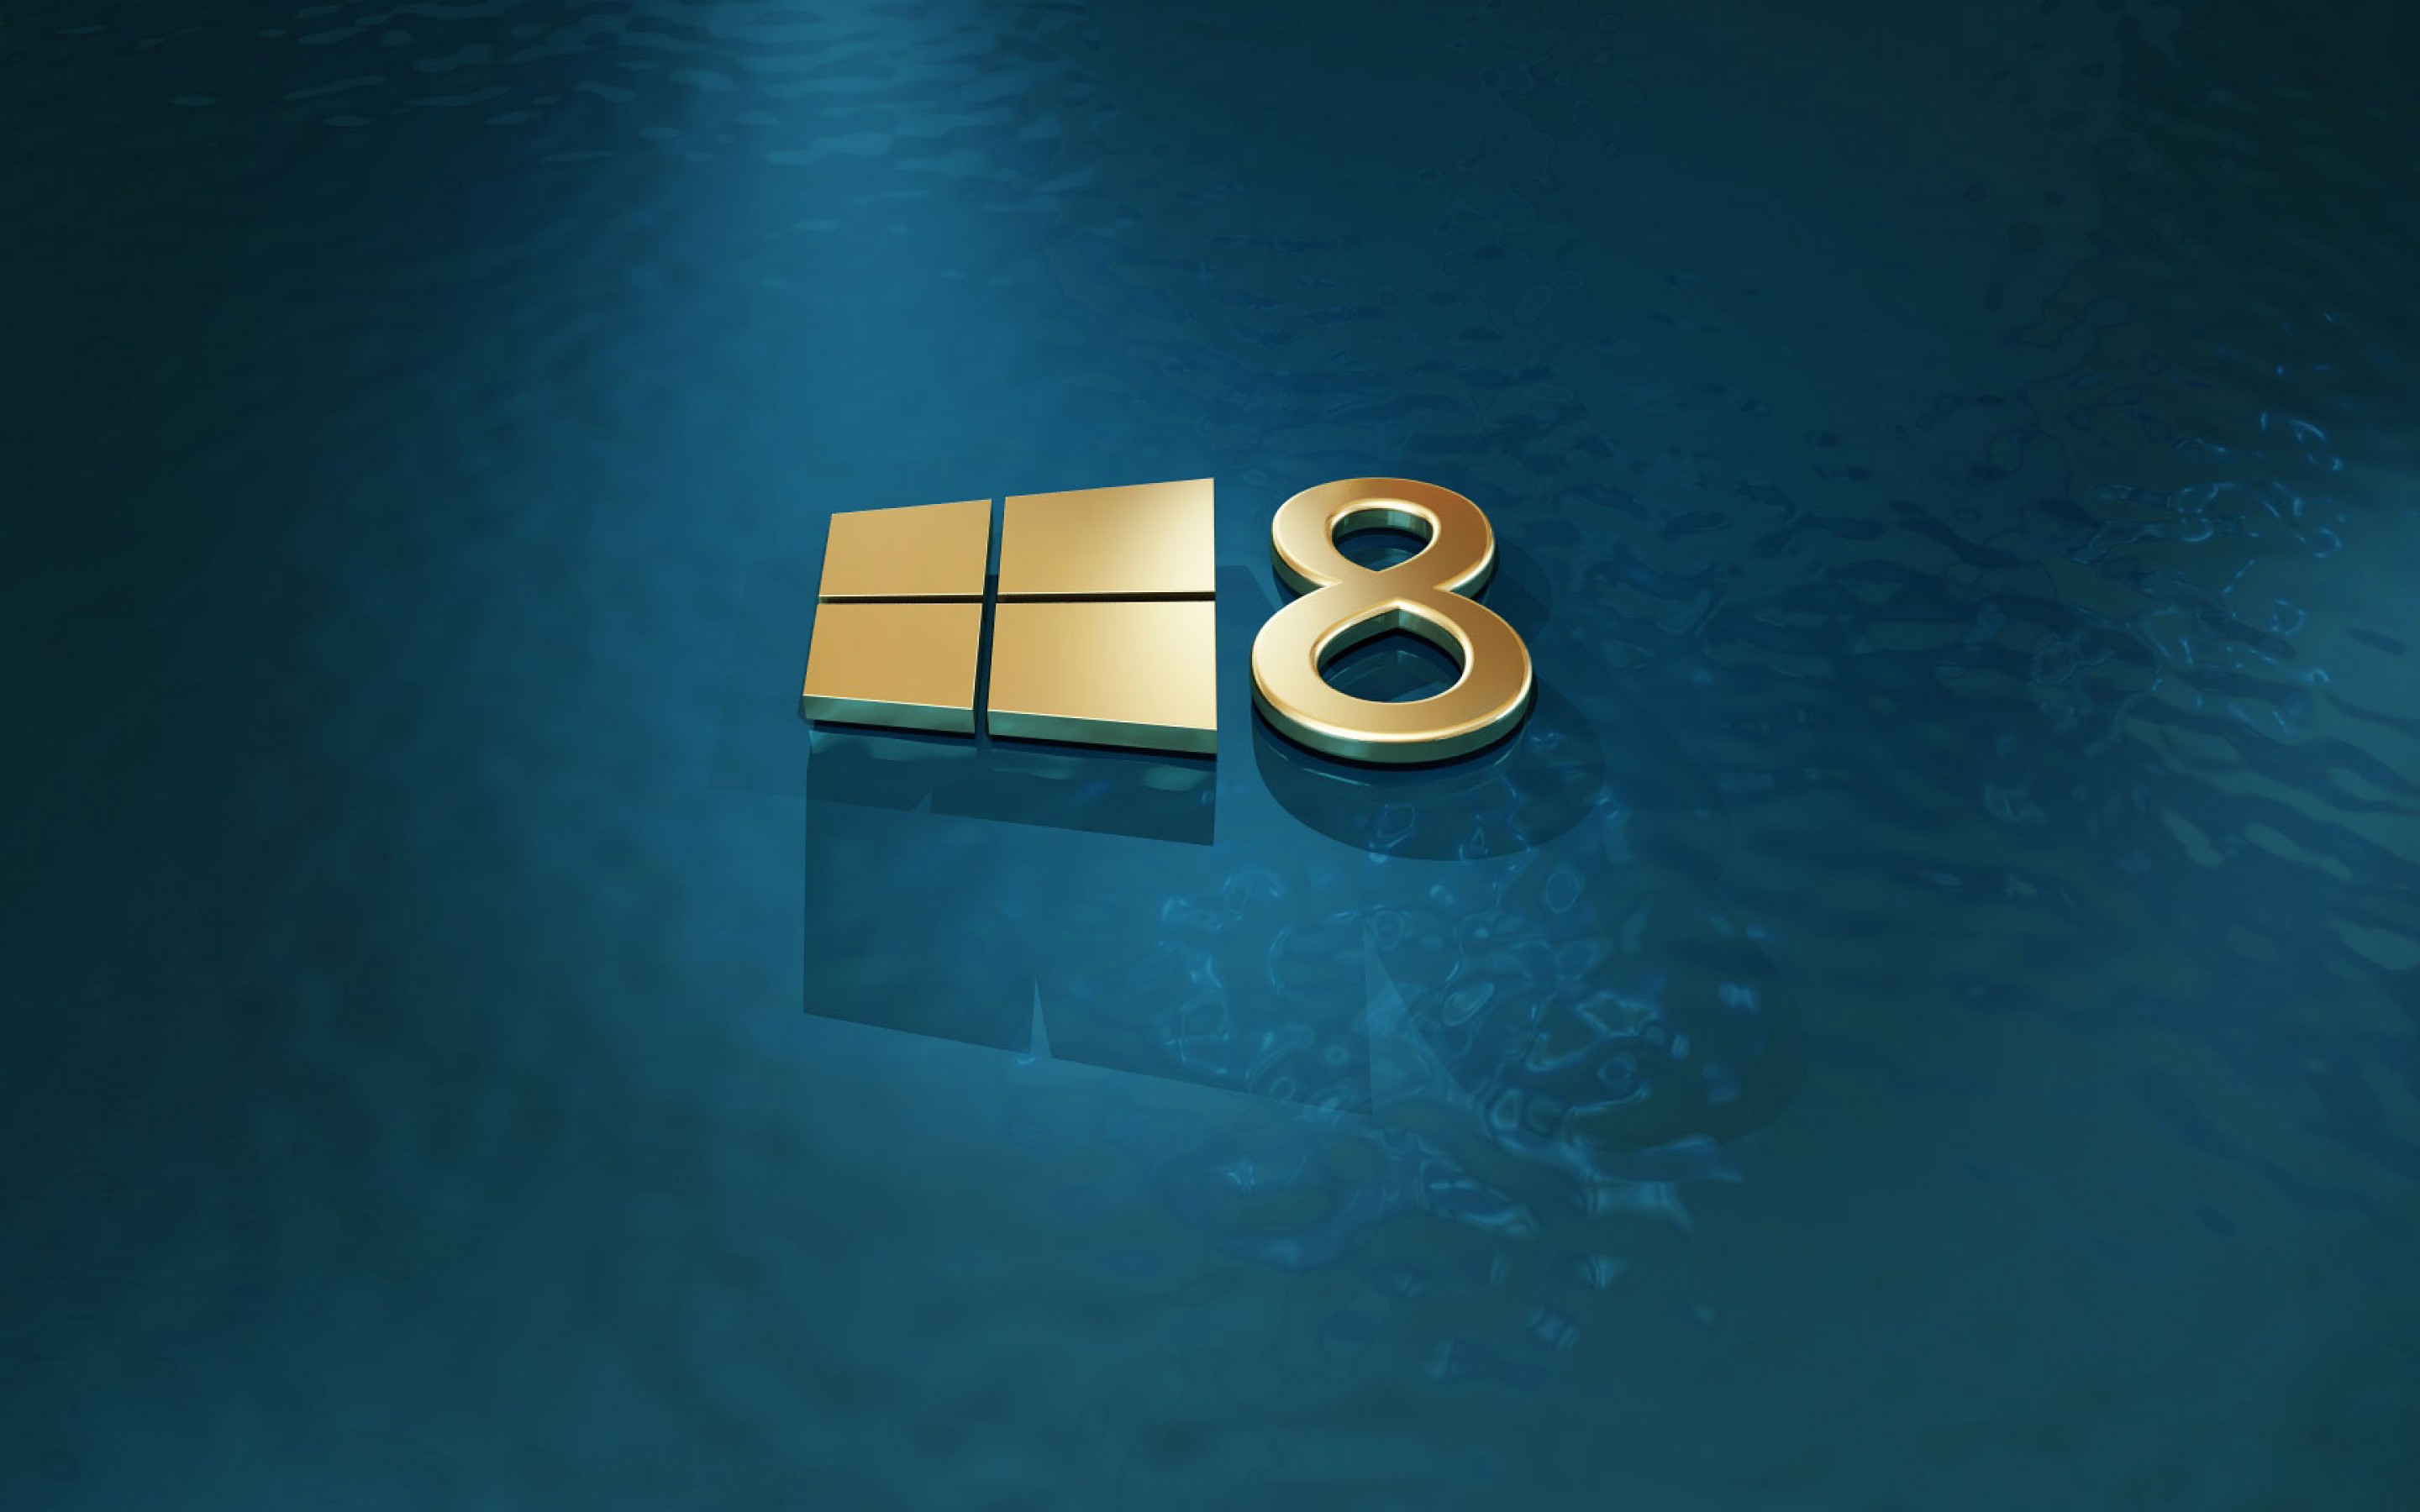 Windows 81 Wallpaper hd 3d For Desktop Blue images